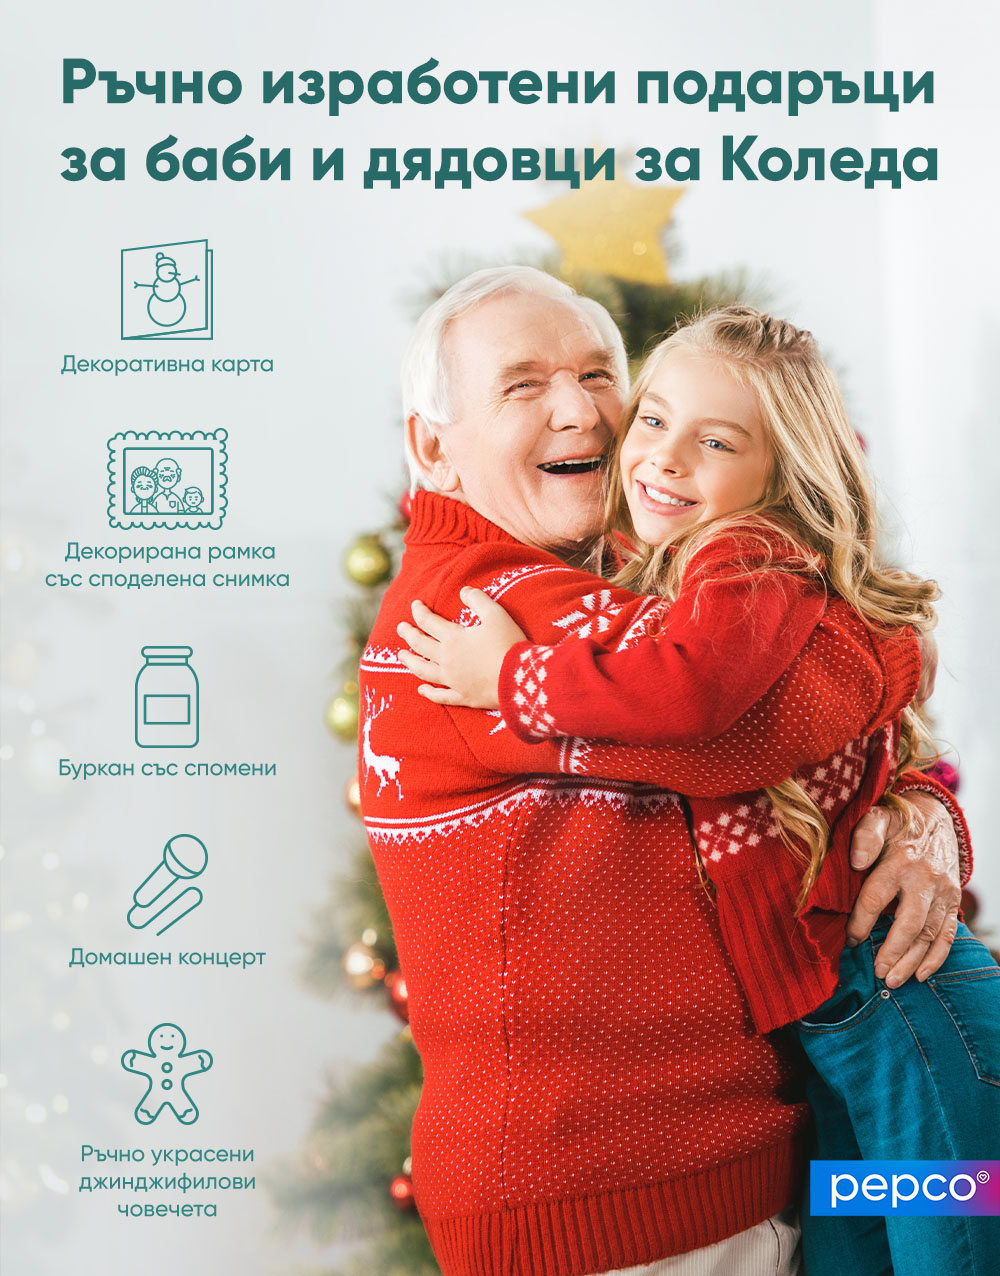 PEPCO инфографика Ръчно изработени подаръци за баба и дядо за Коледа.